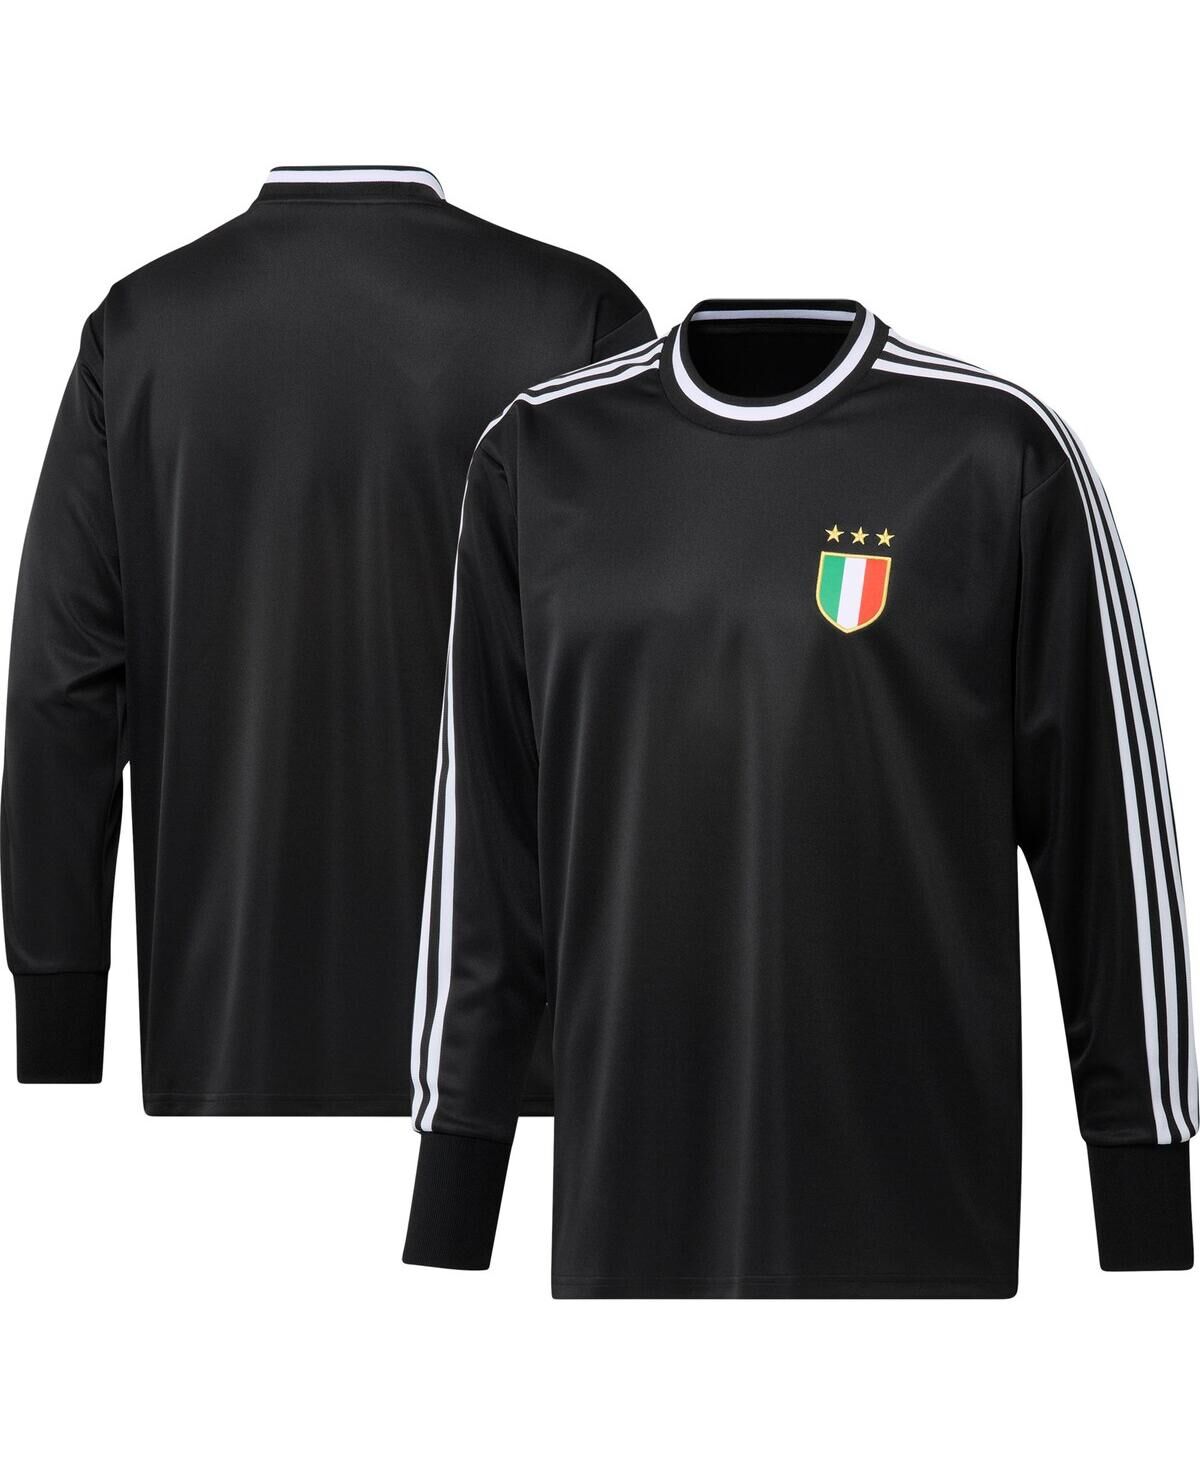 Adidas Men's adidas Black Juventus Authentic Football Icon Goalkeeper Jersey - Black